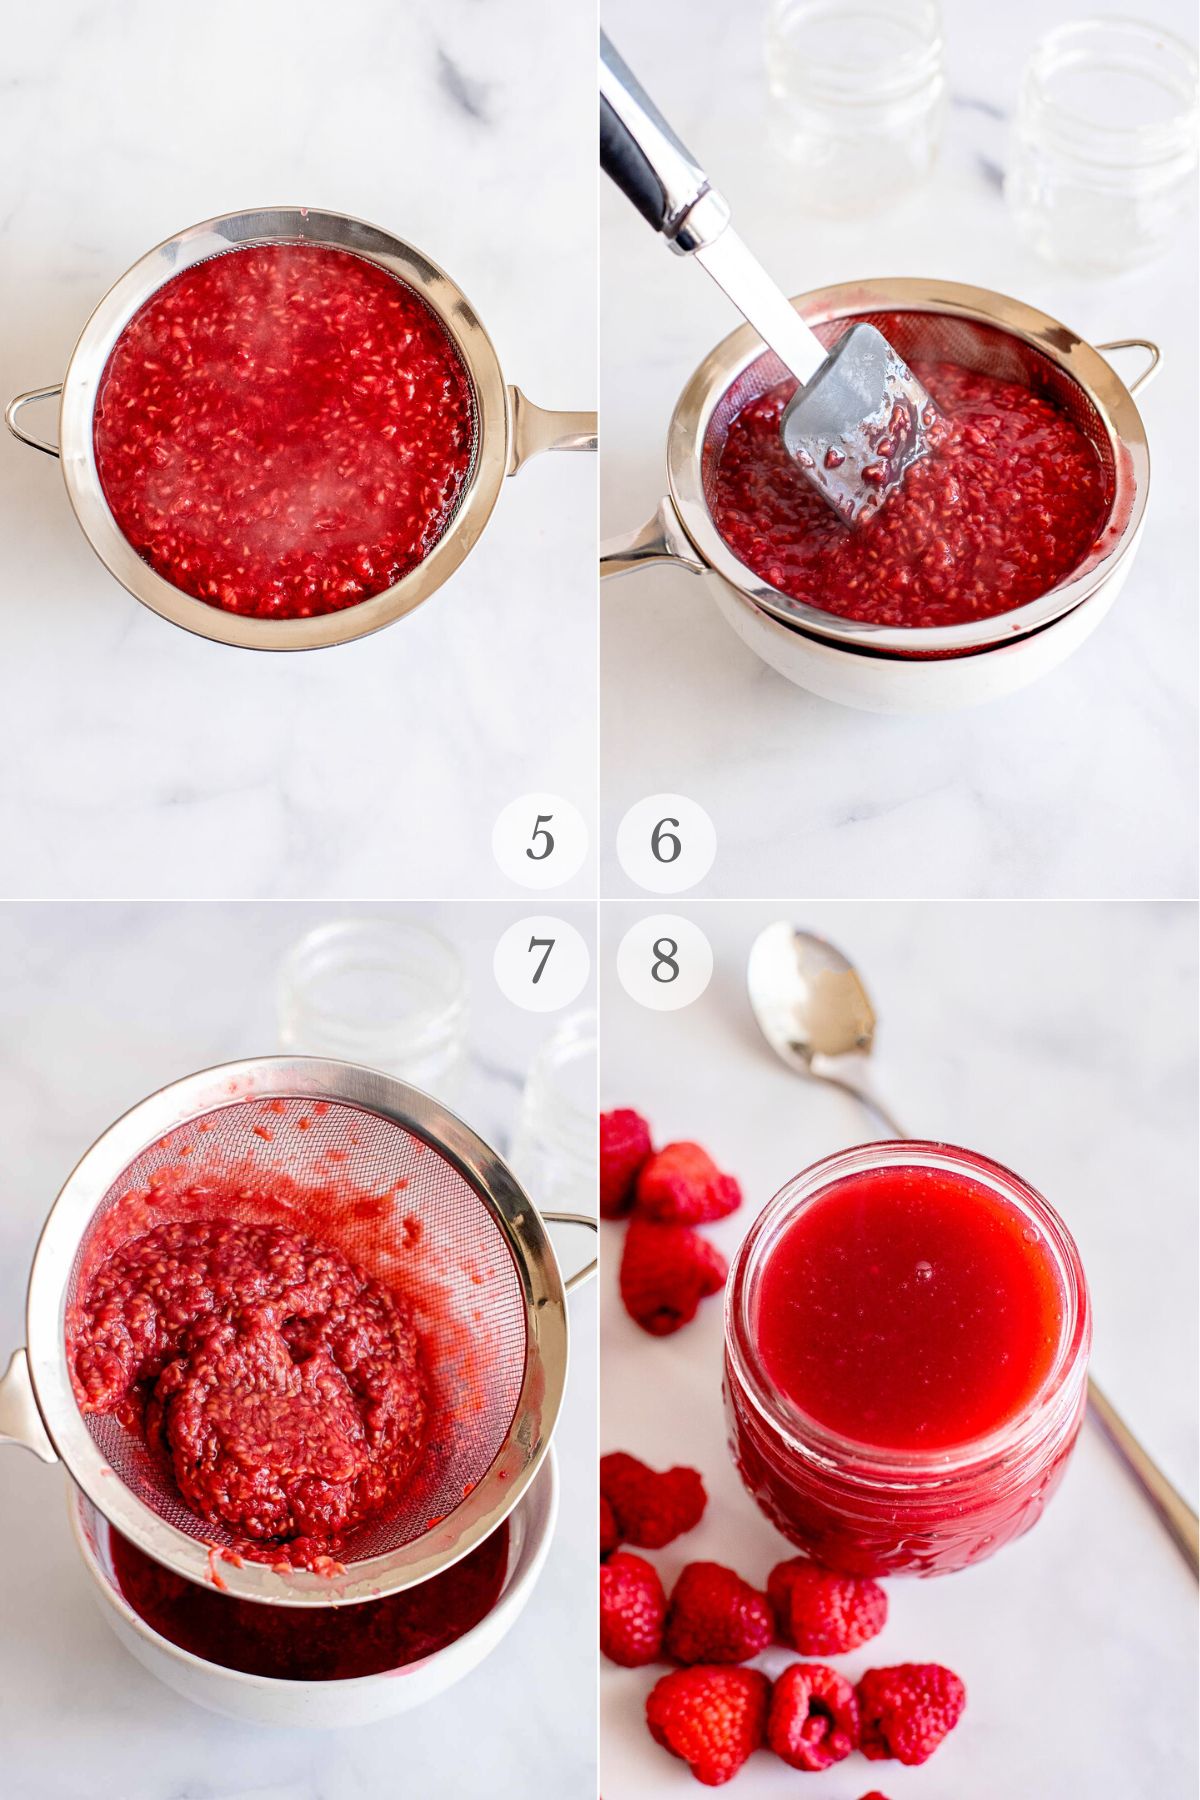 raspberry sauce recipes steps 5-8.